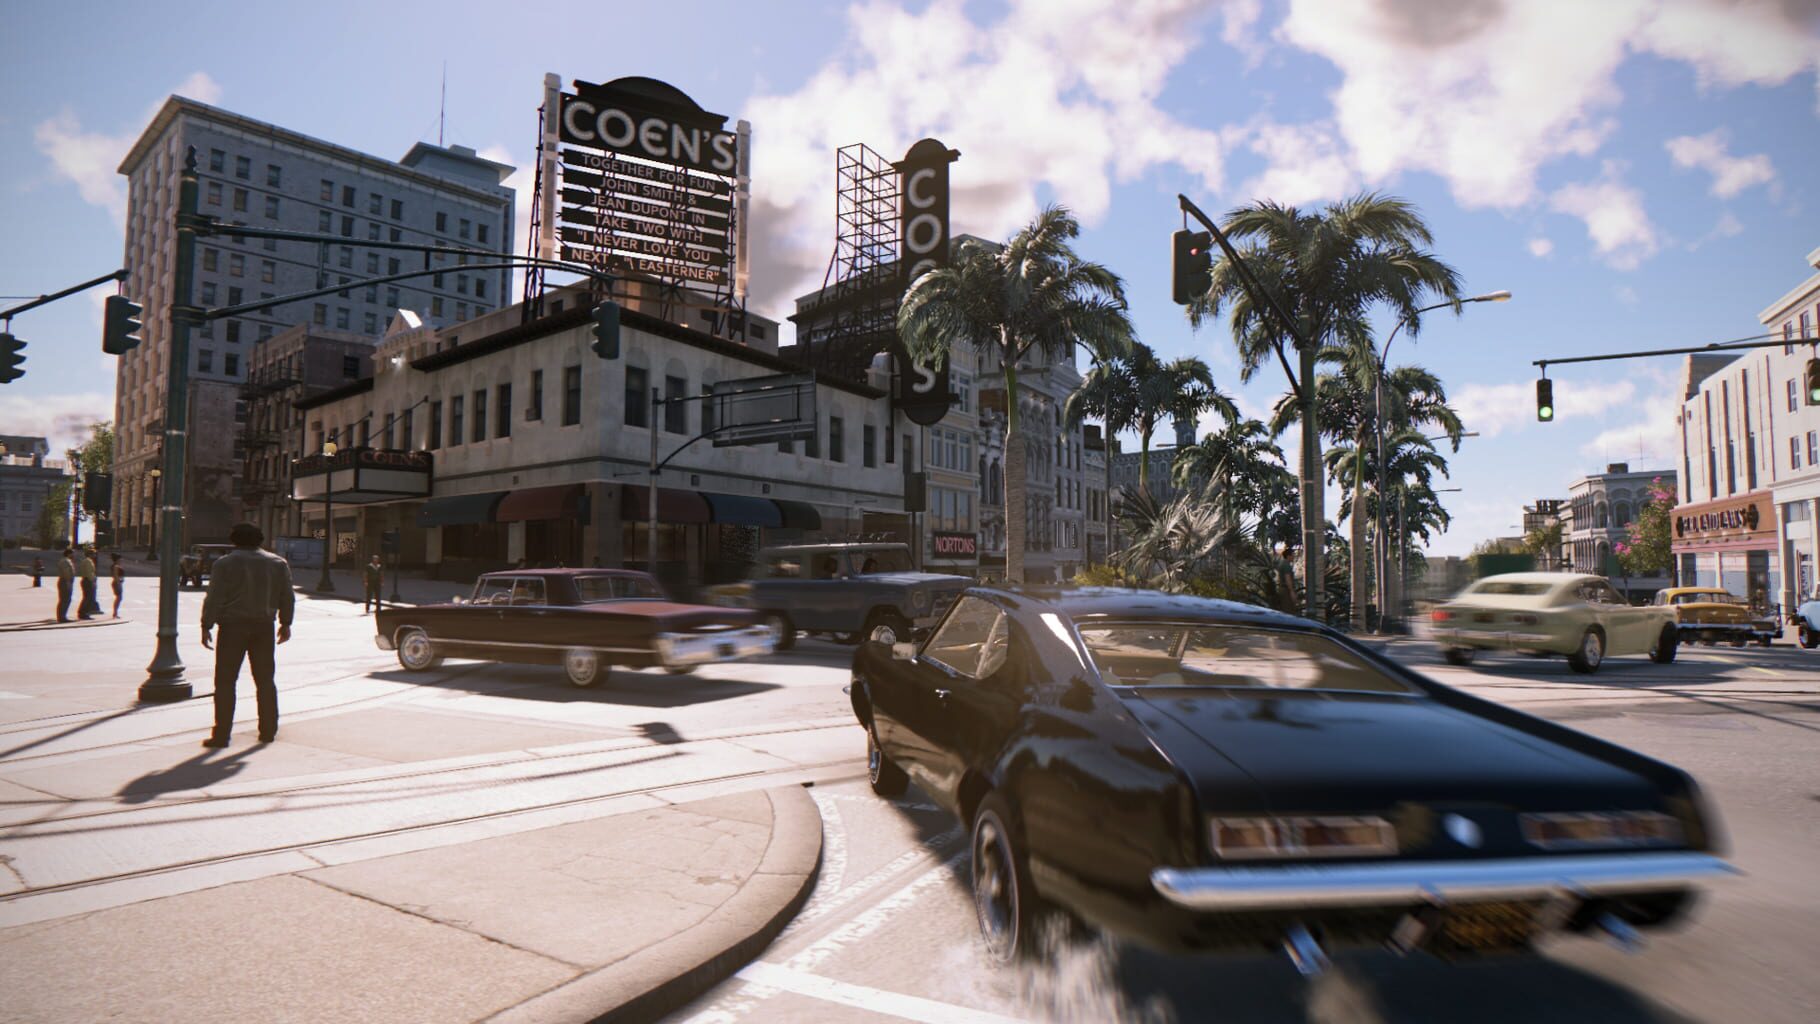 Mafia III screenshots